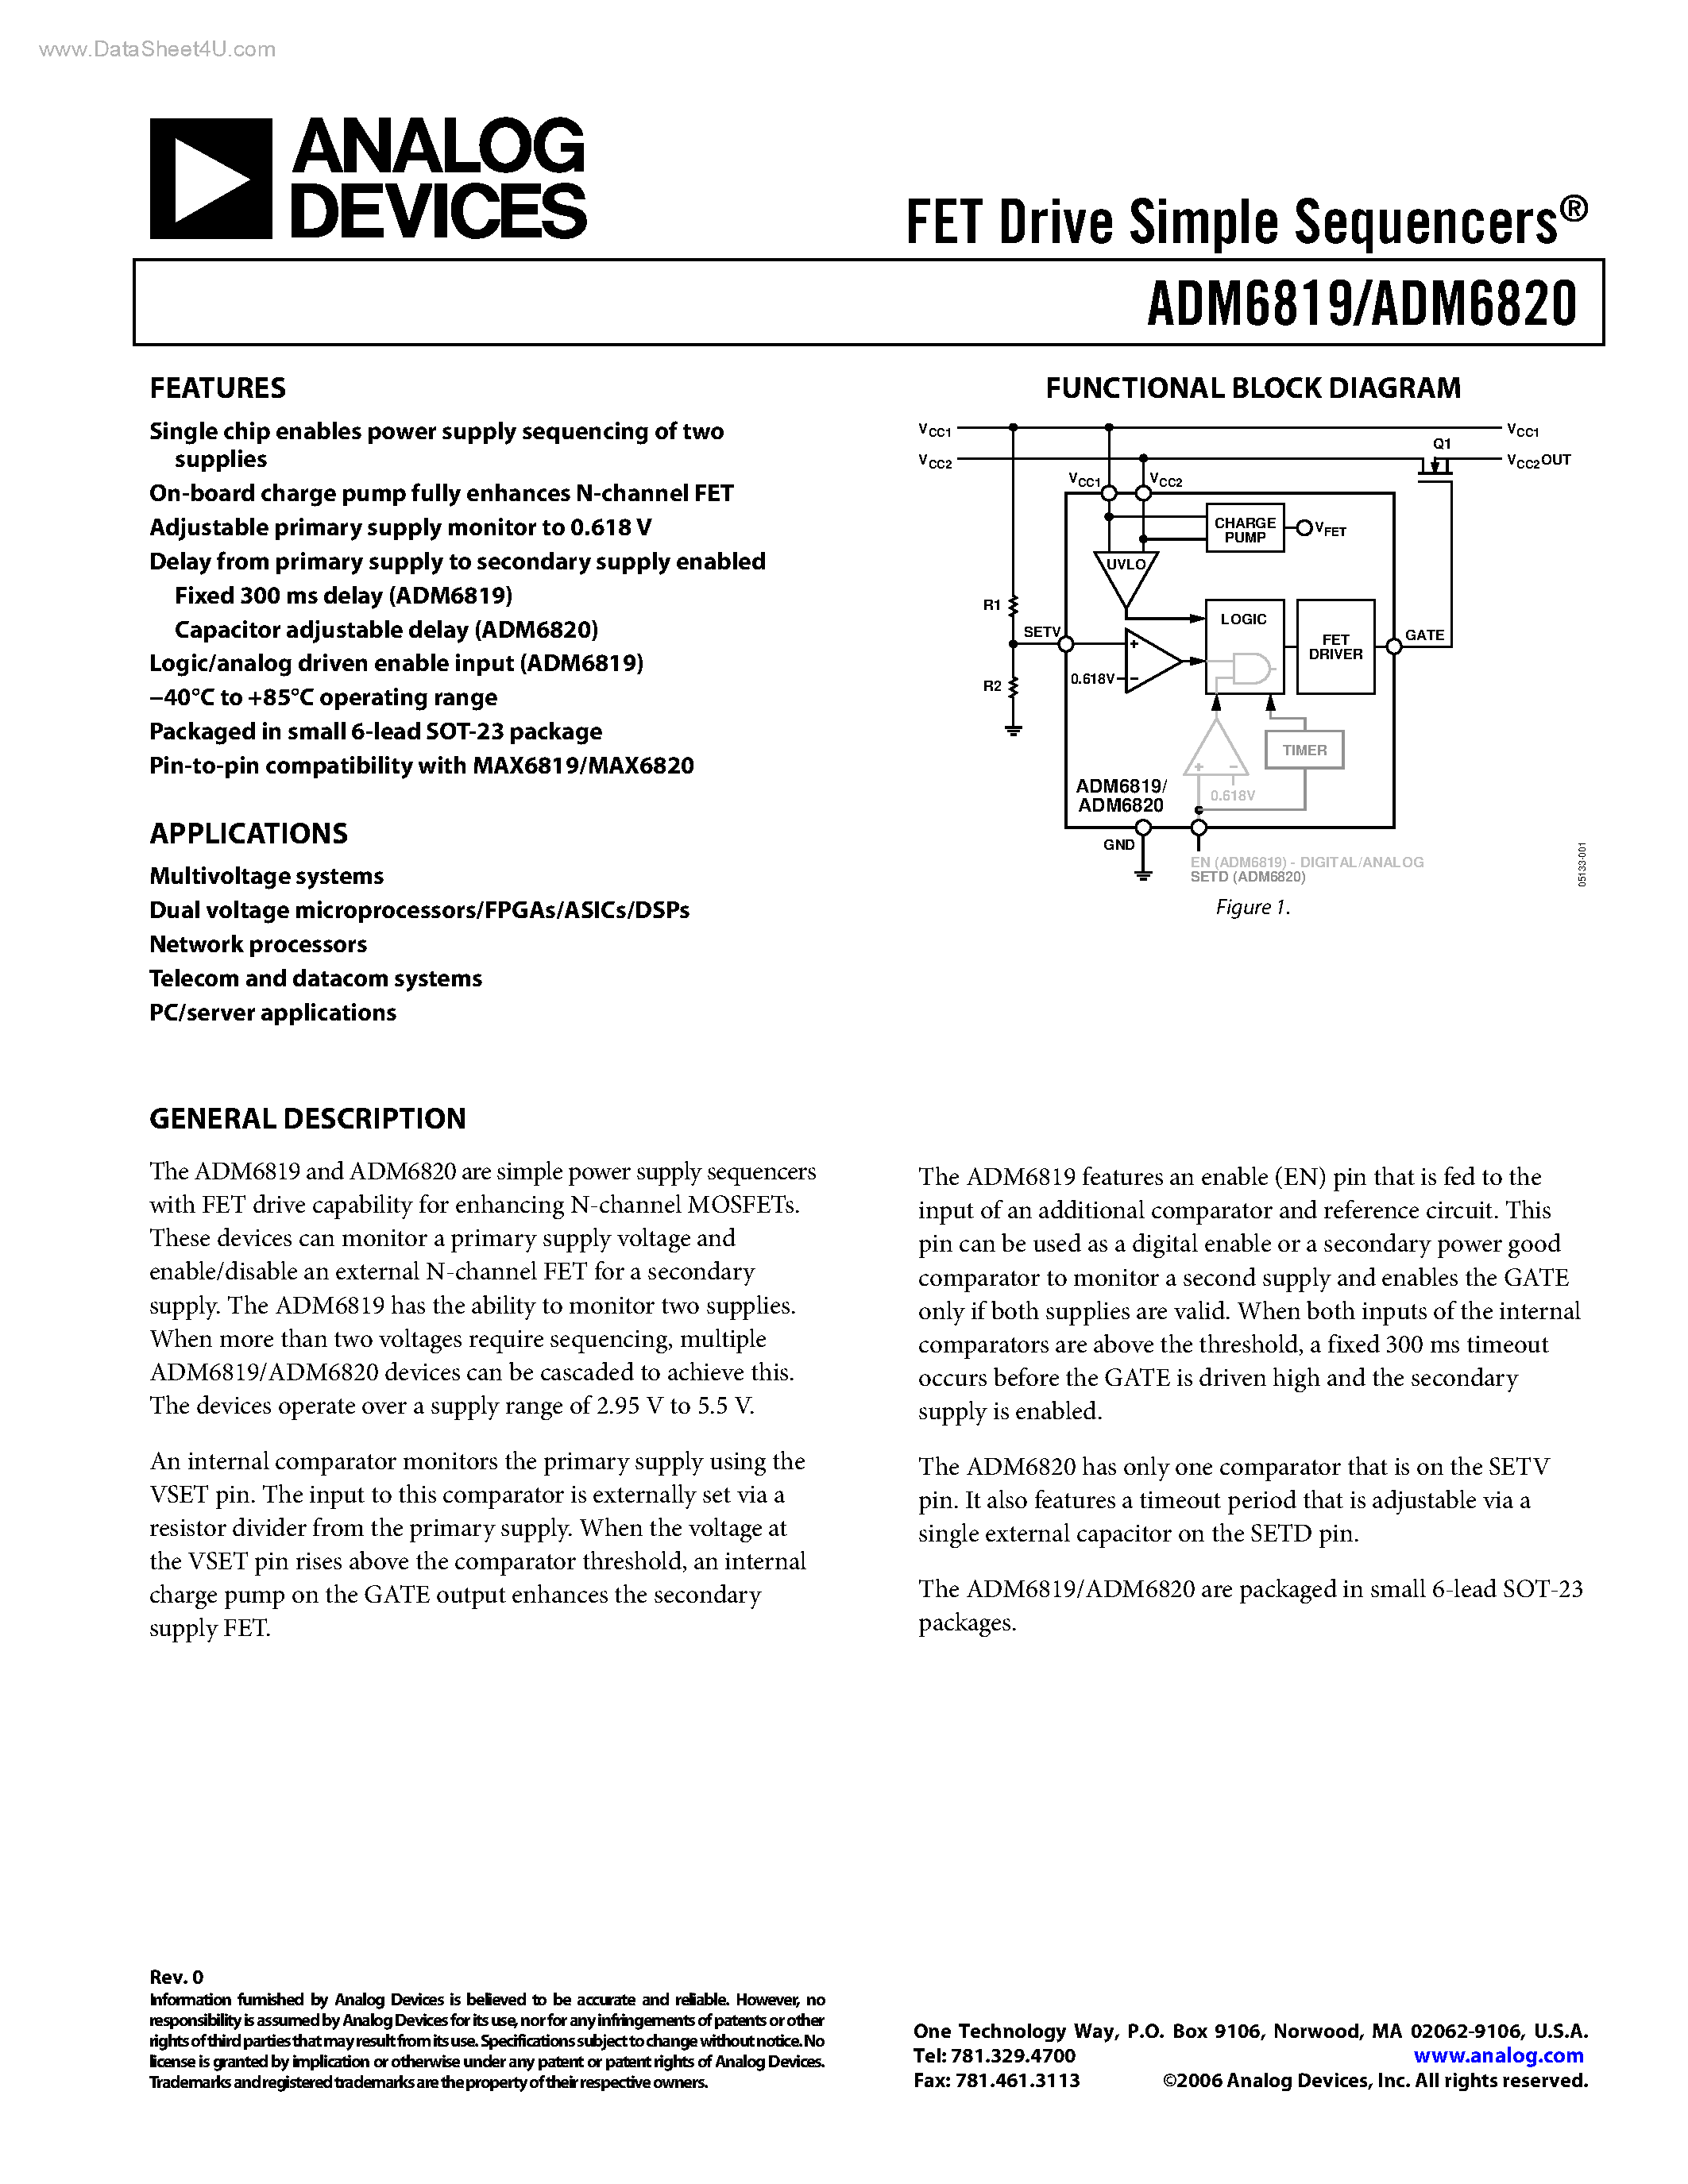 Даташит ADM6819 - (ADM6819 / ADM6820) FET Drive Simple Sequencers страница 1